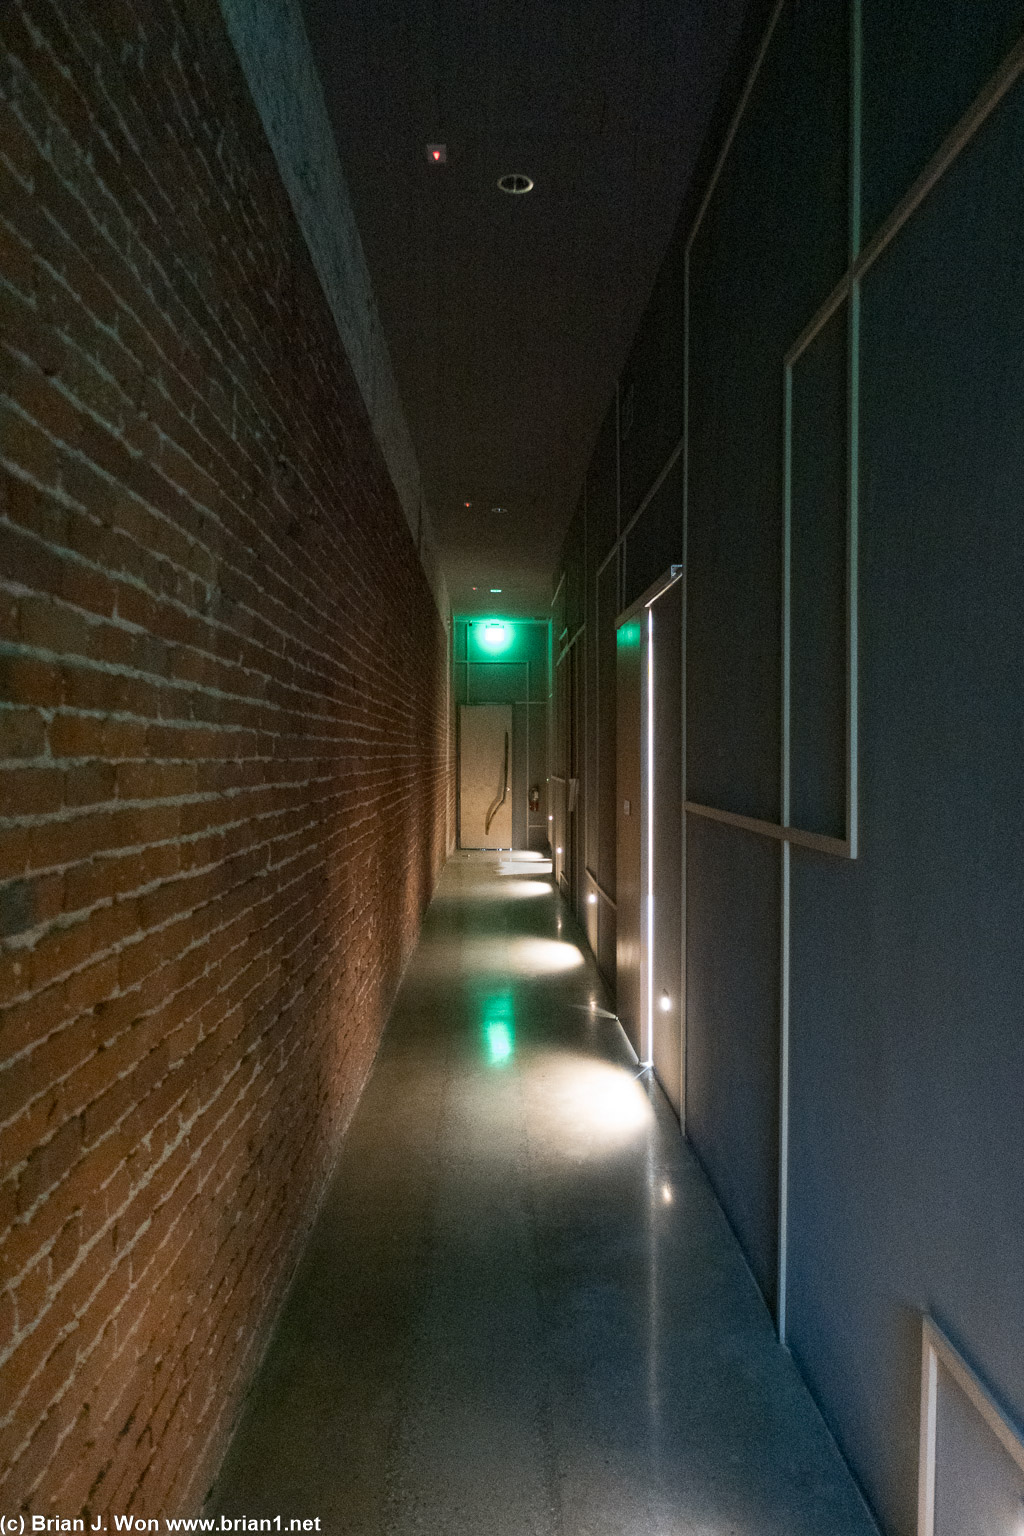 Long hallway from the bathroom.